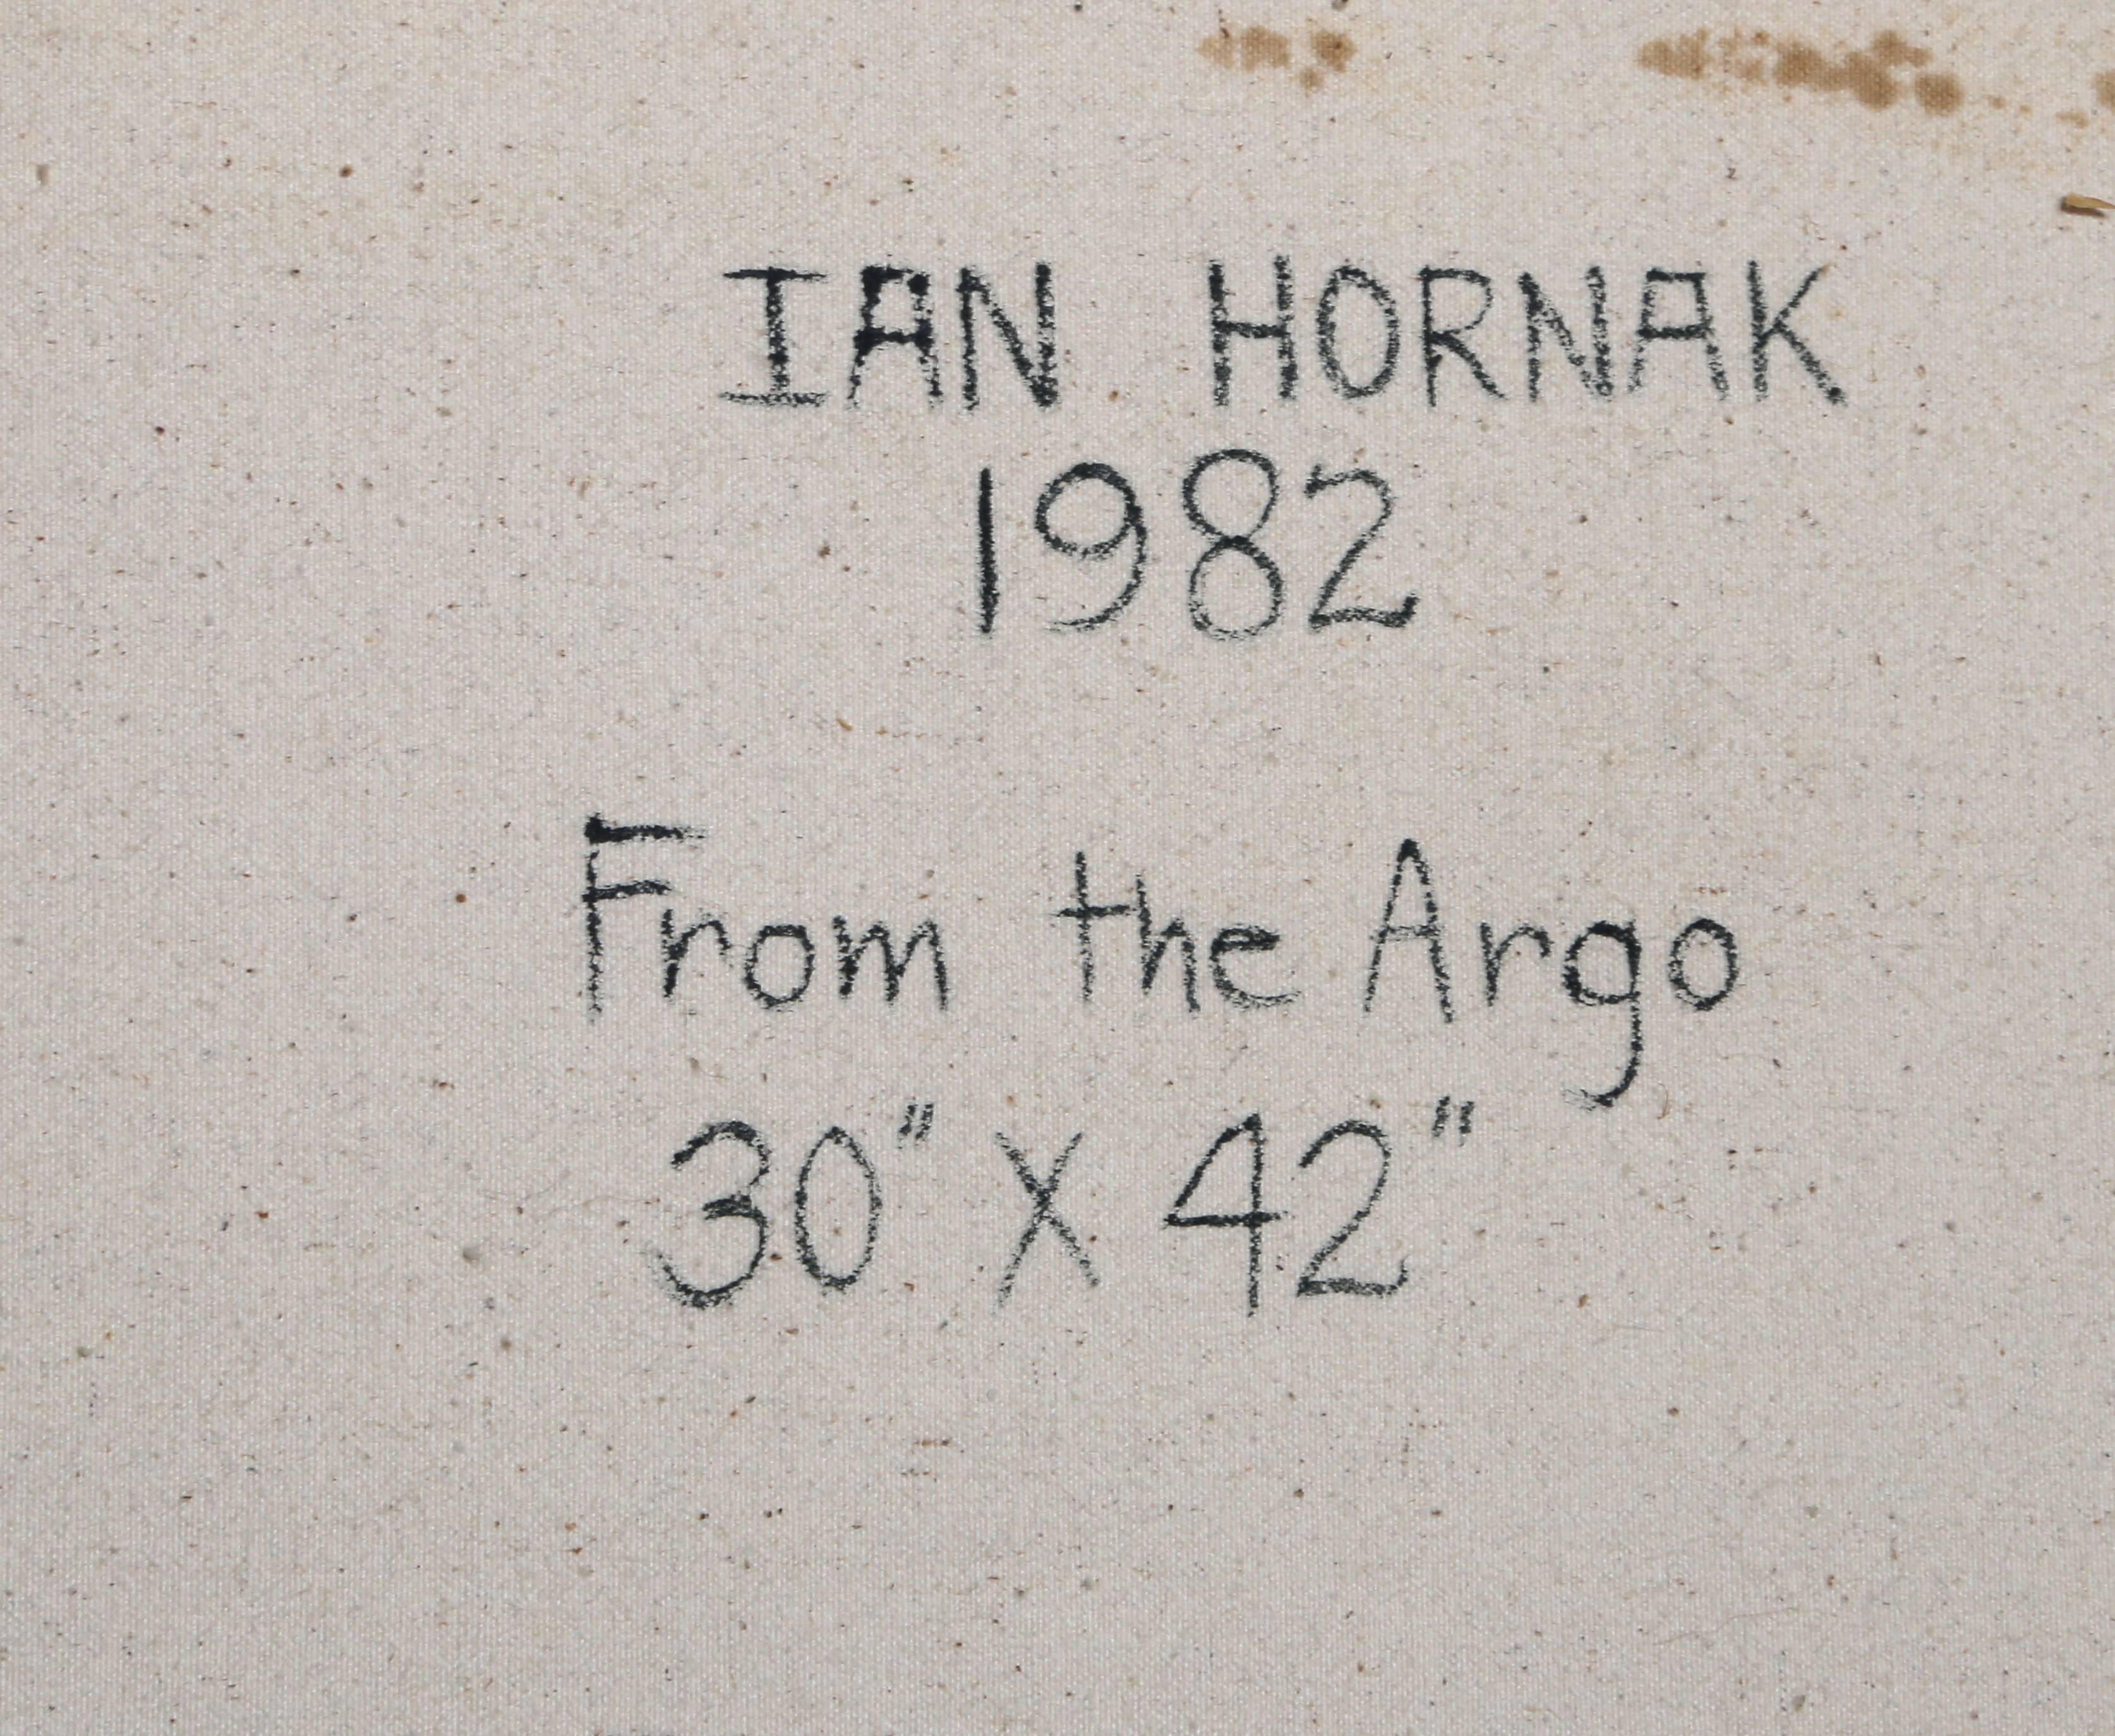 Ian Hornak, 